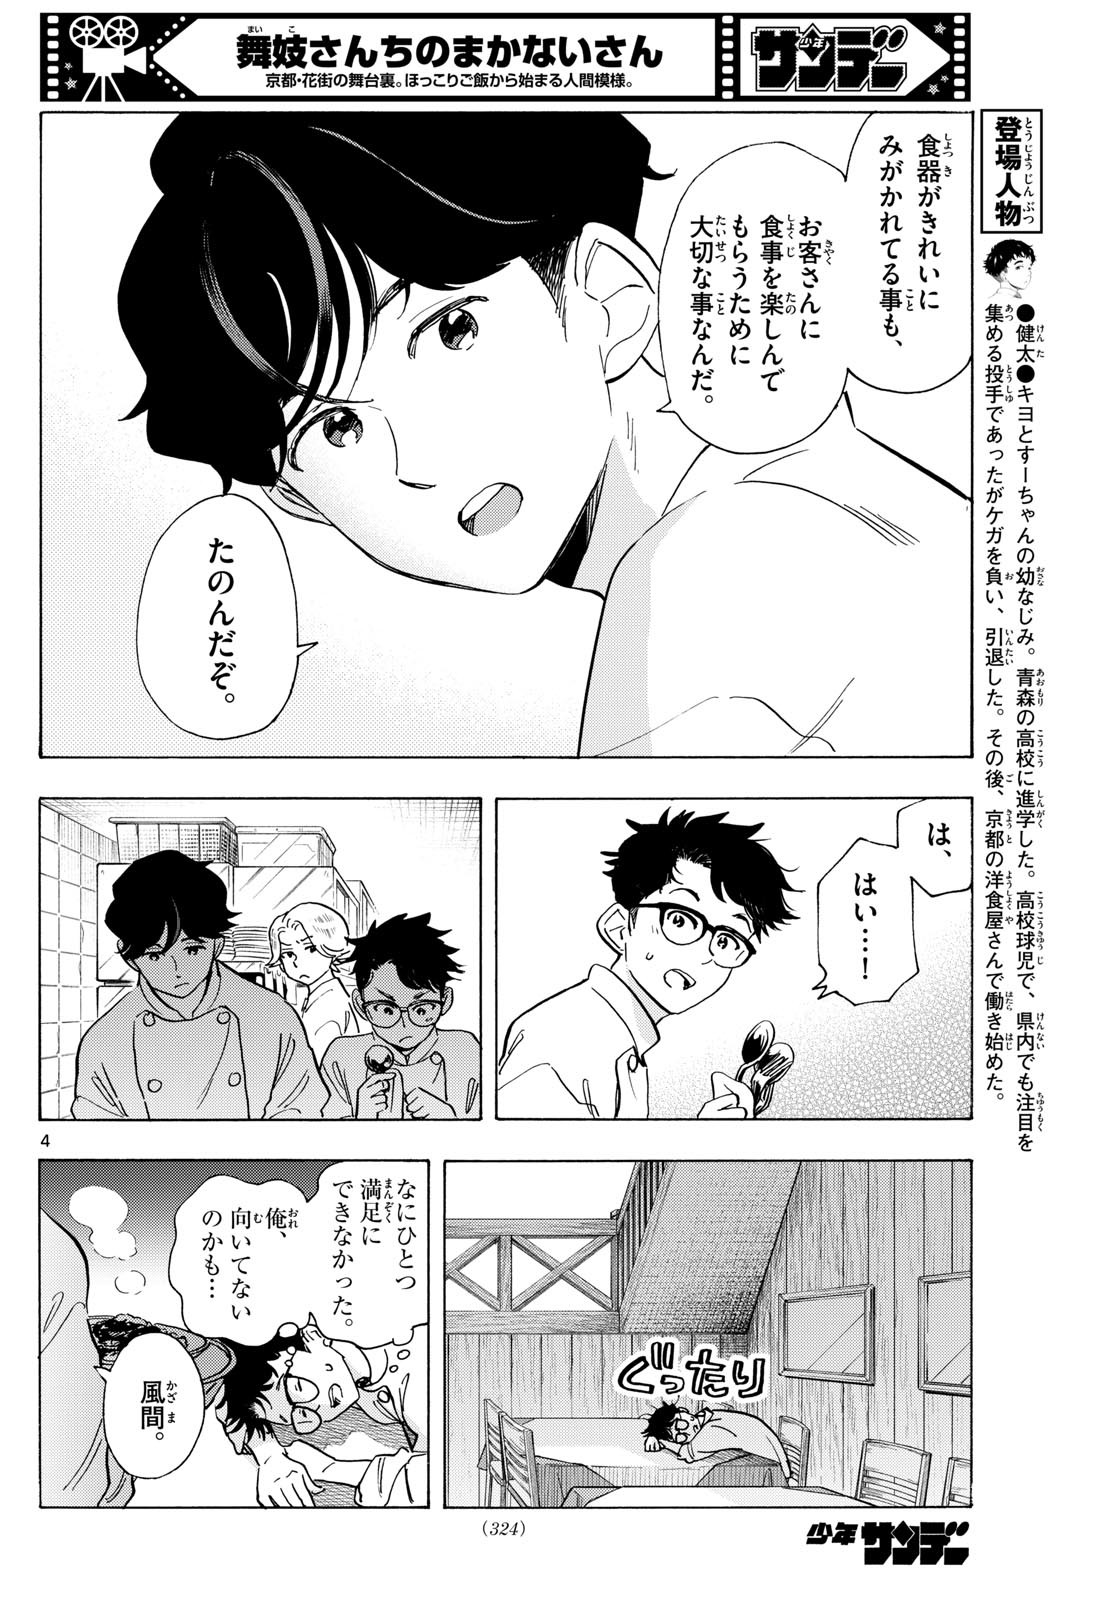 Maiko-san Chi no Makanai-san - Chapter 308 - Page 4